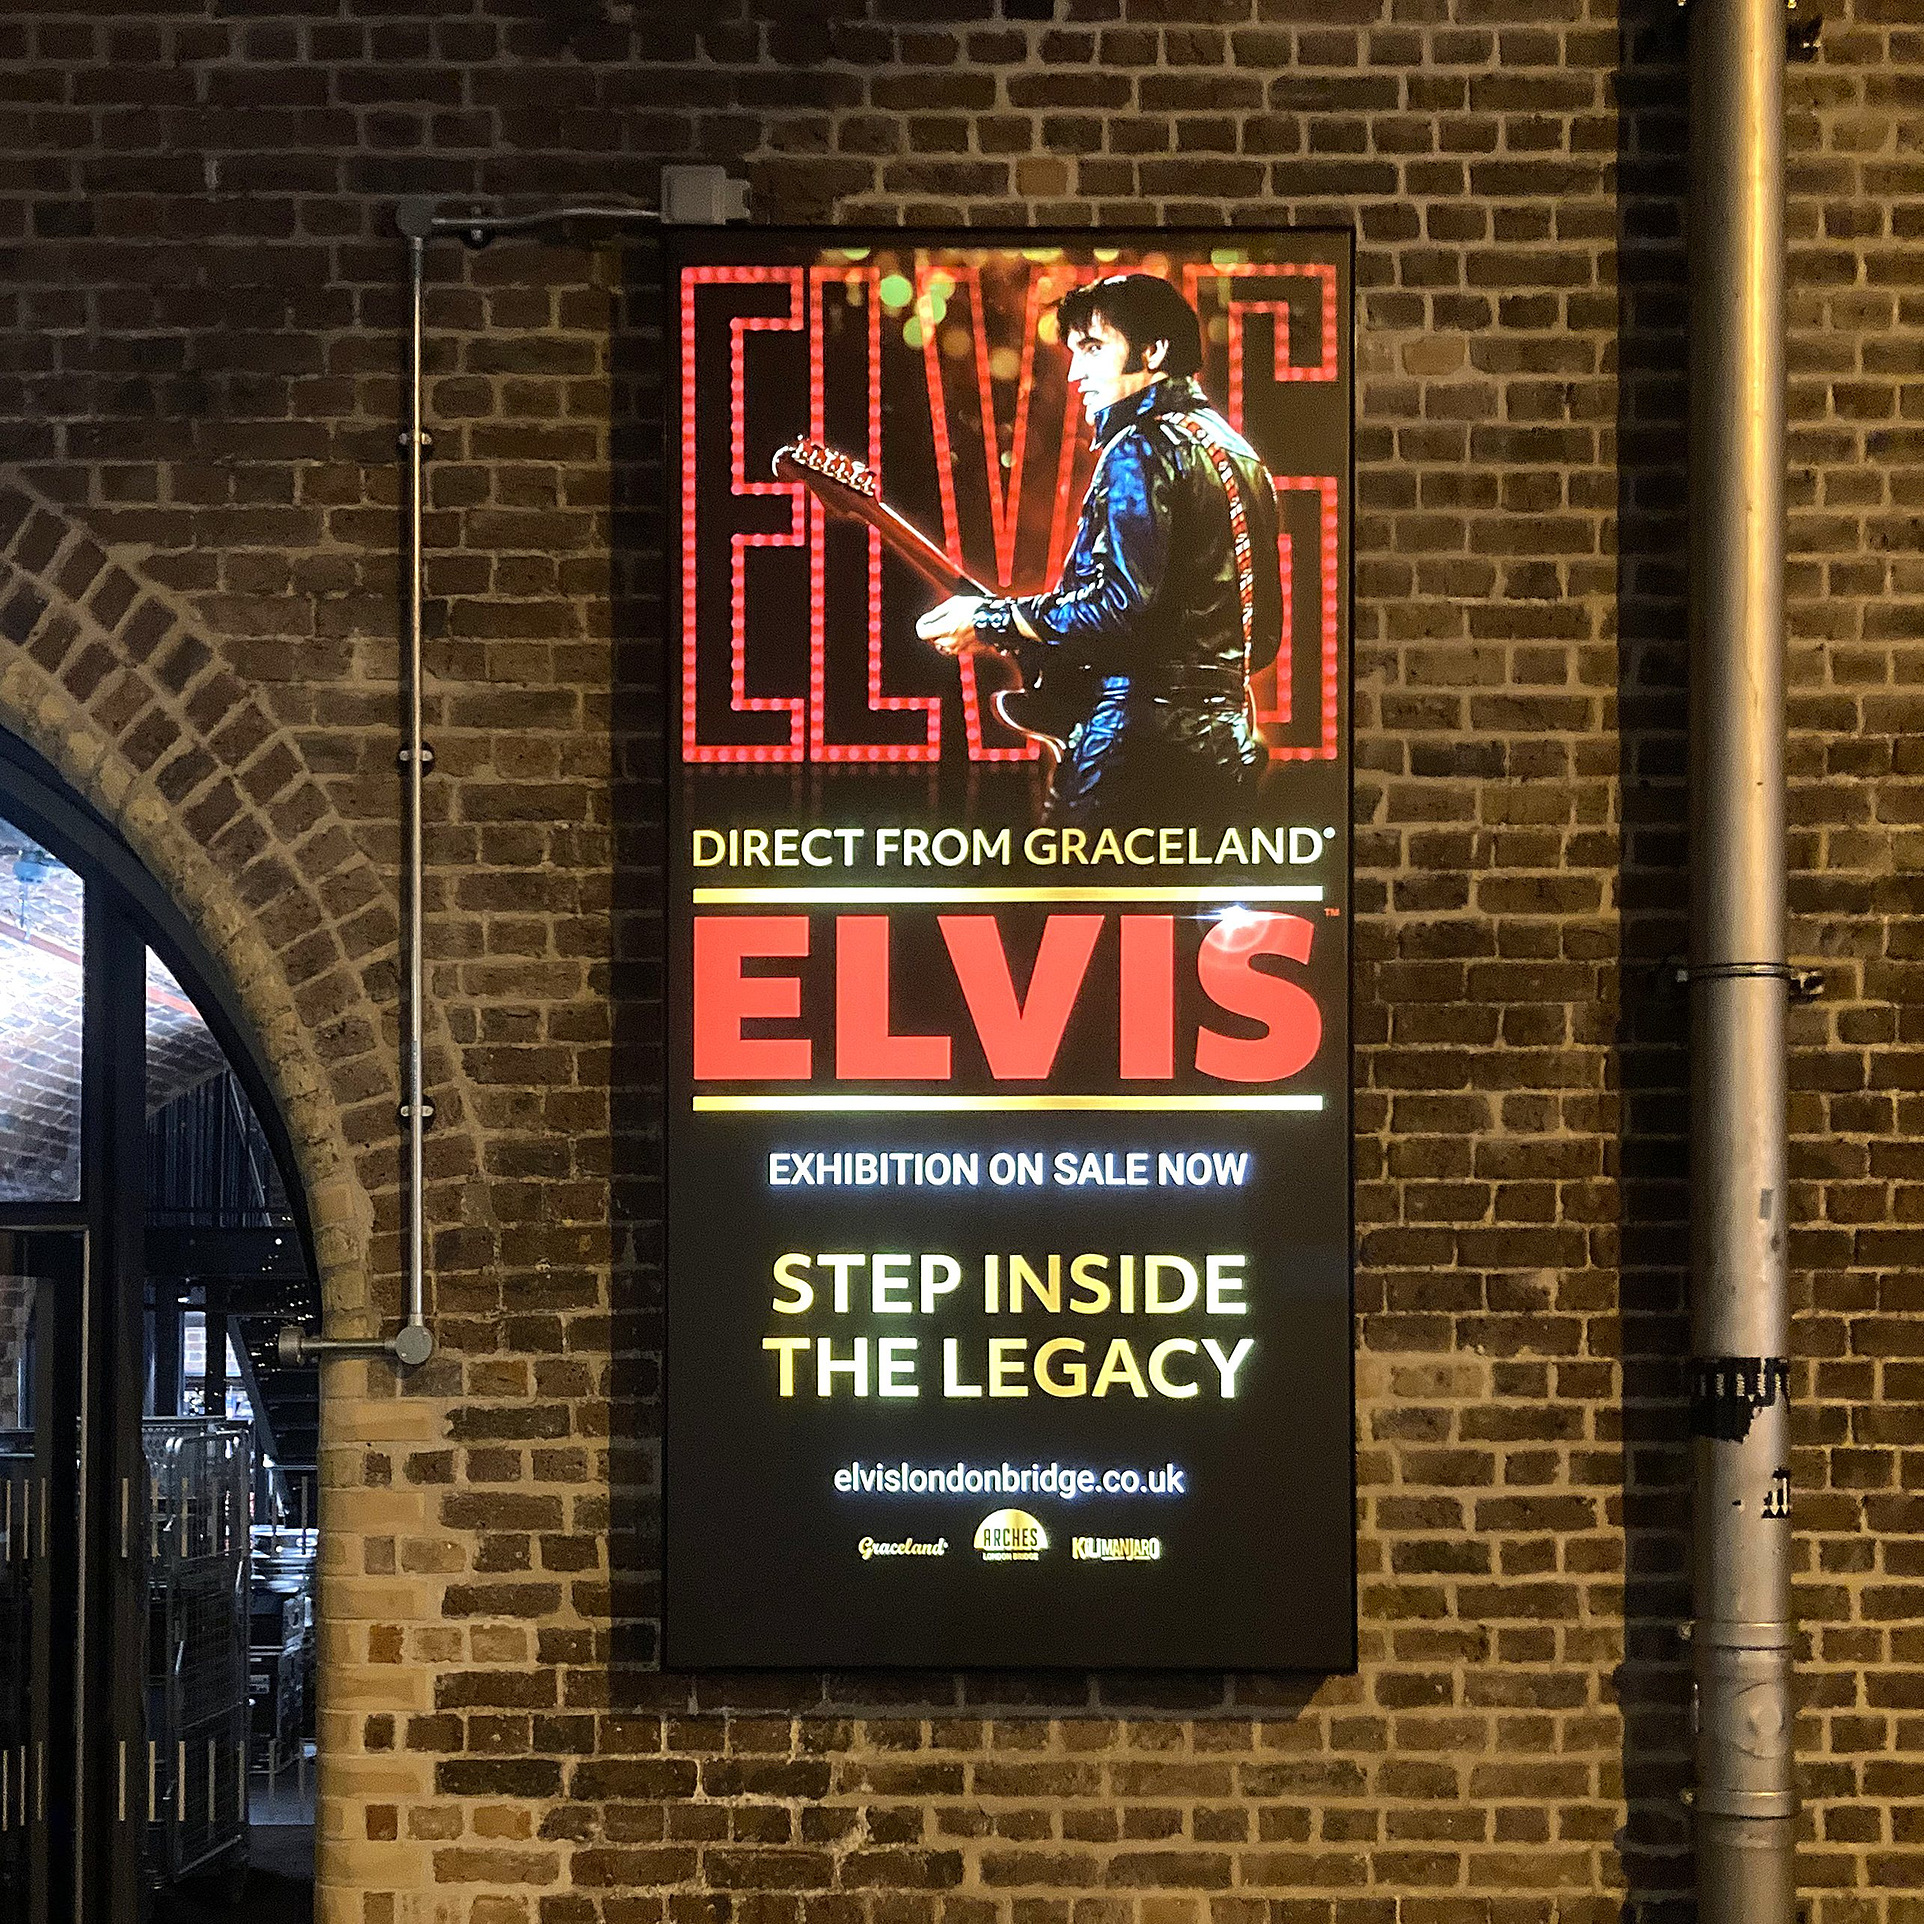 Elvis Exhibition at Arches, London